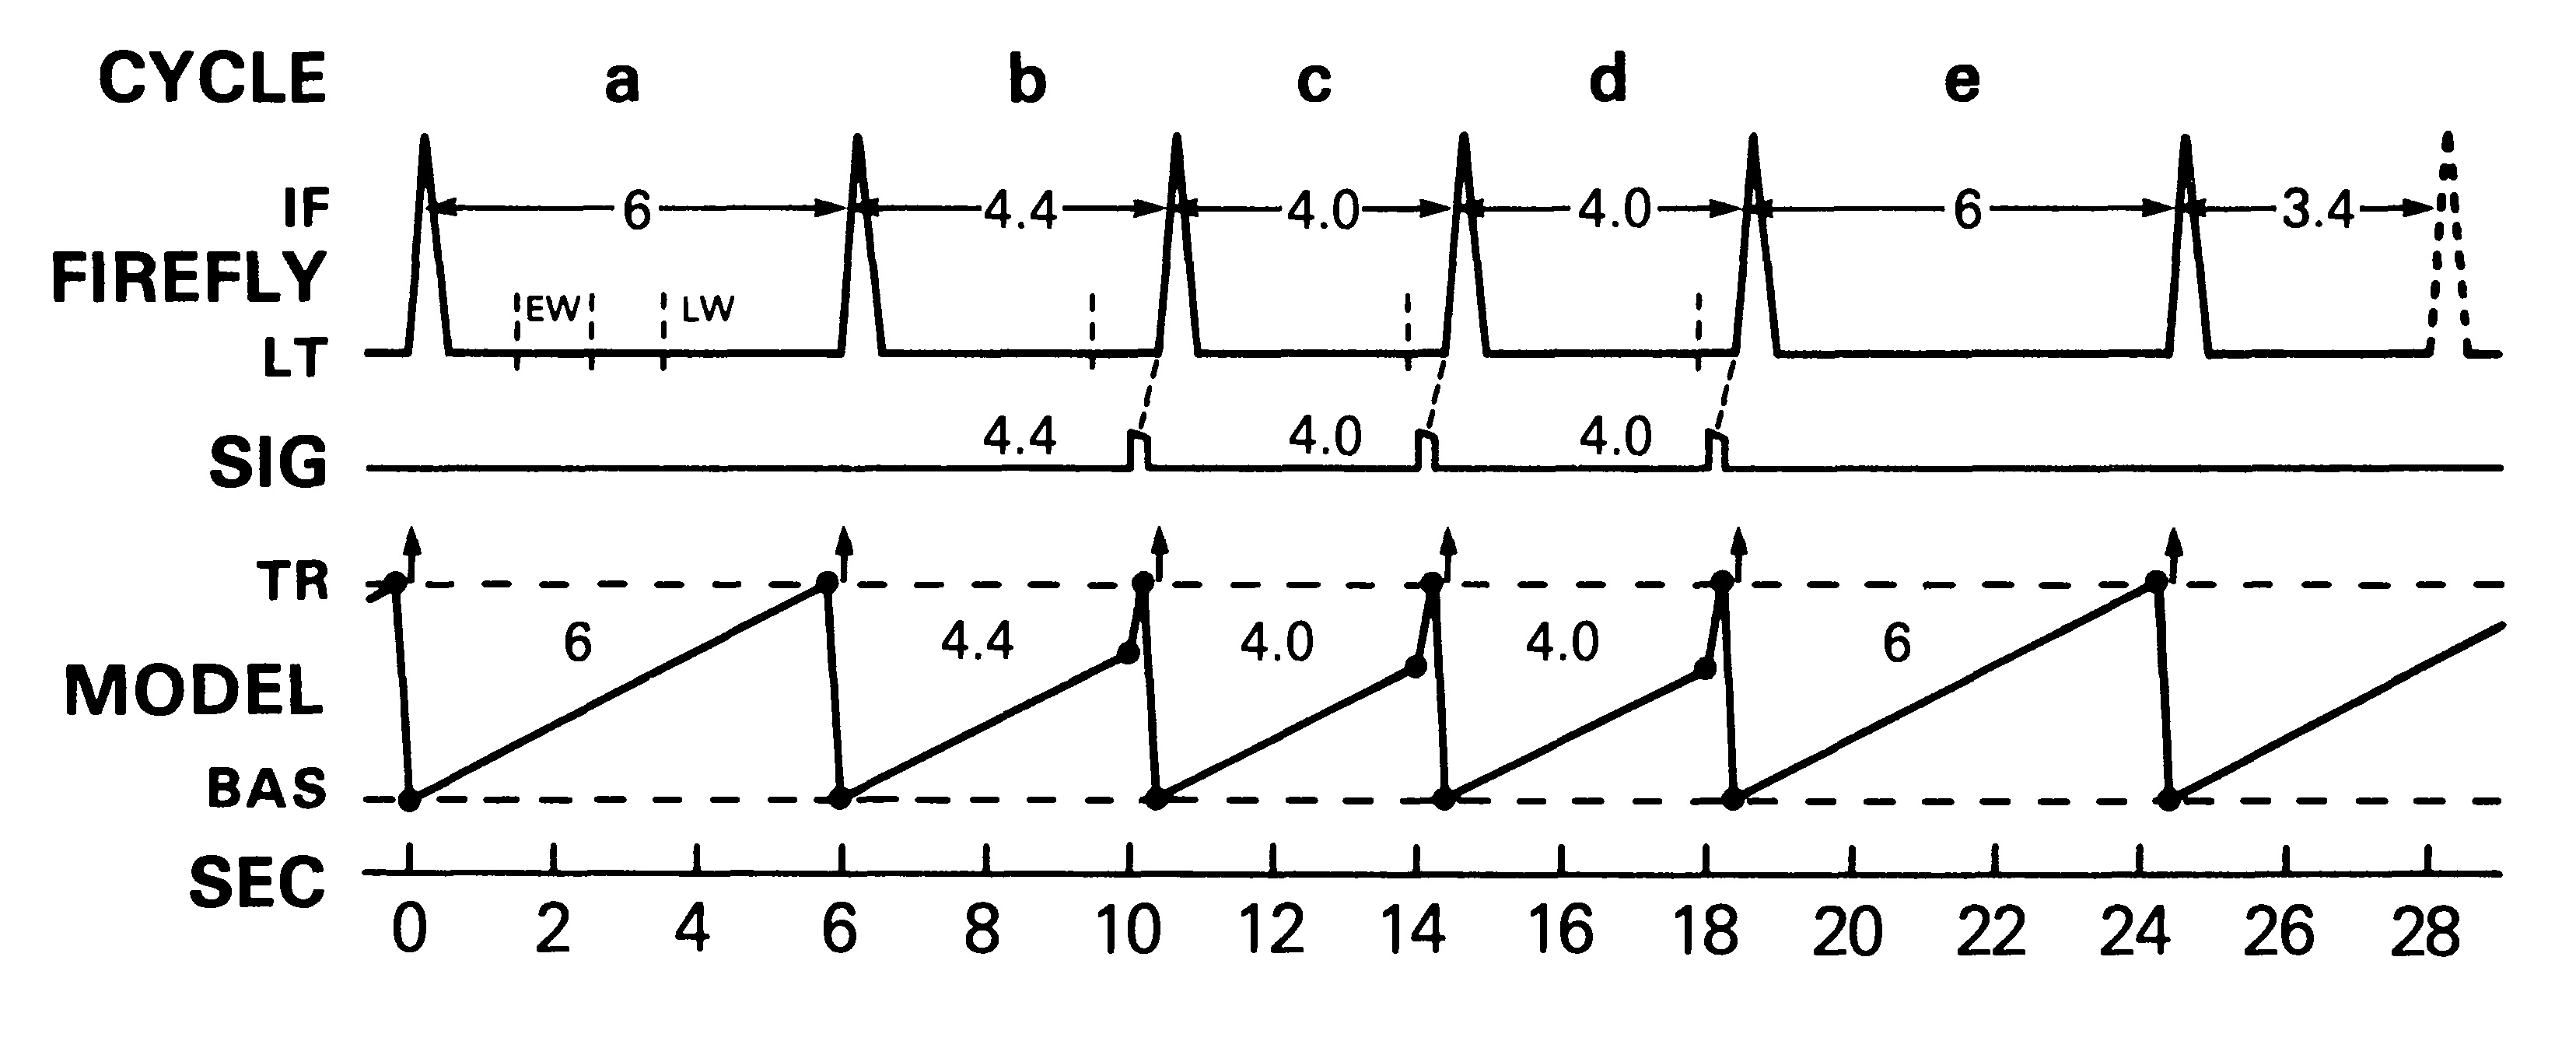 Diagramme temporel tiré de l'article de Buck de 1988